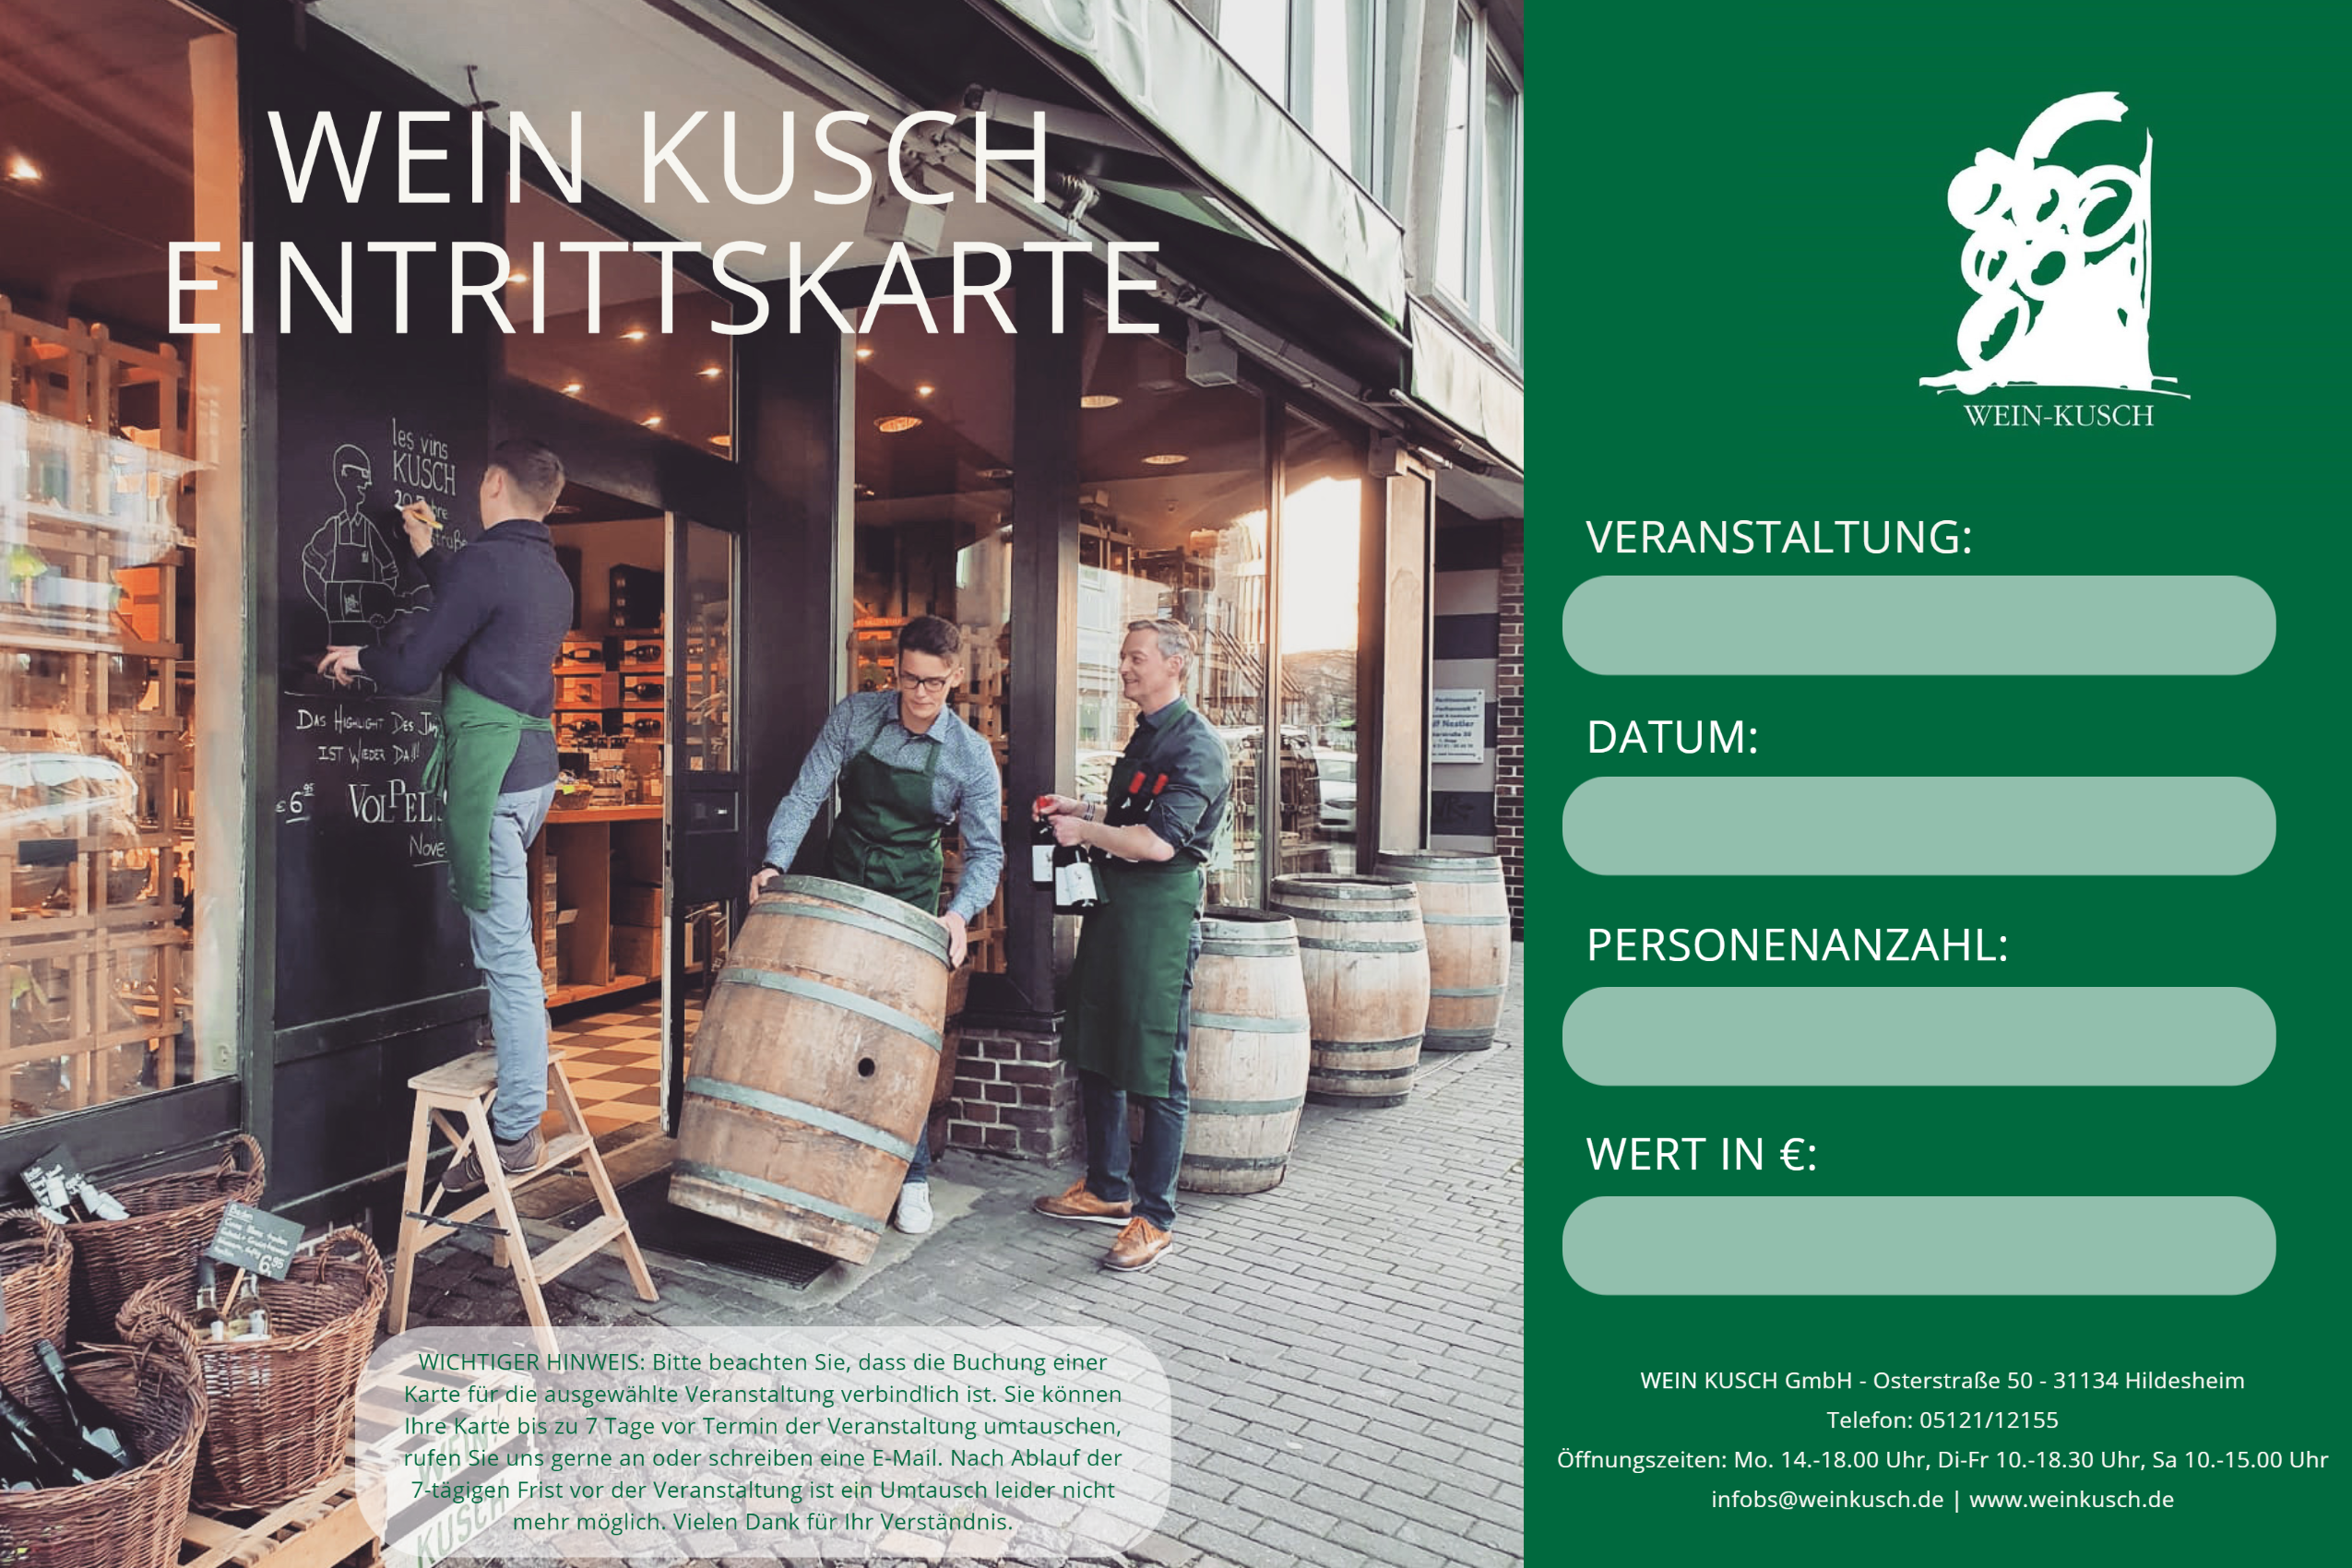 2023.03.17 - PEATED Whisky Tasting "Rauchige Torfmonster" in Hildesheim 19.00 Uhr